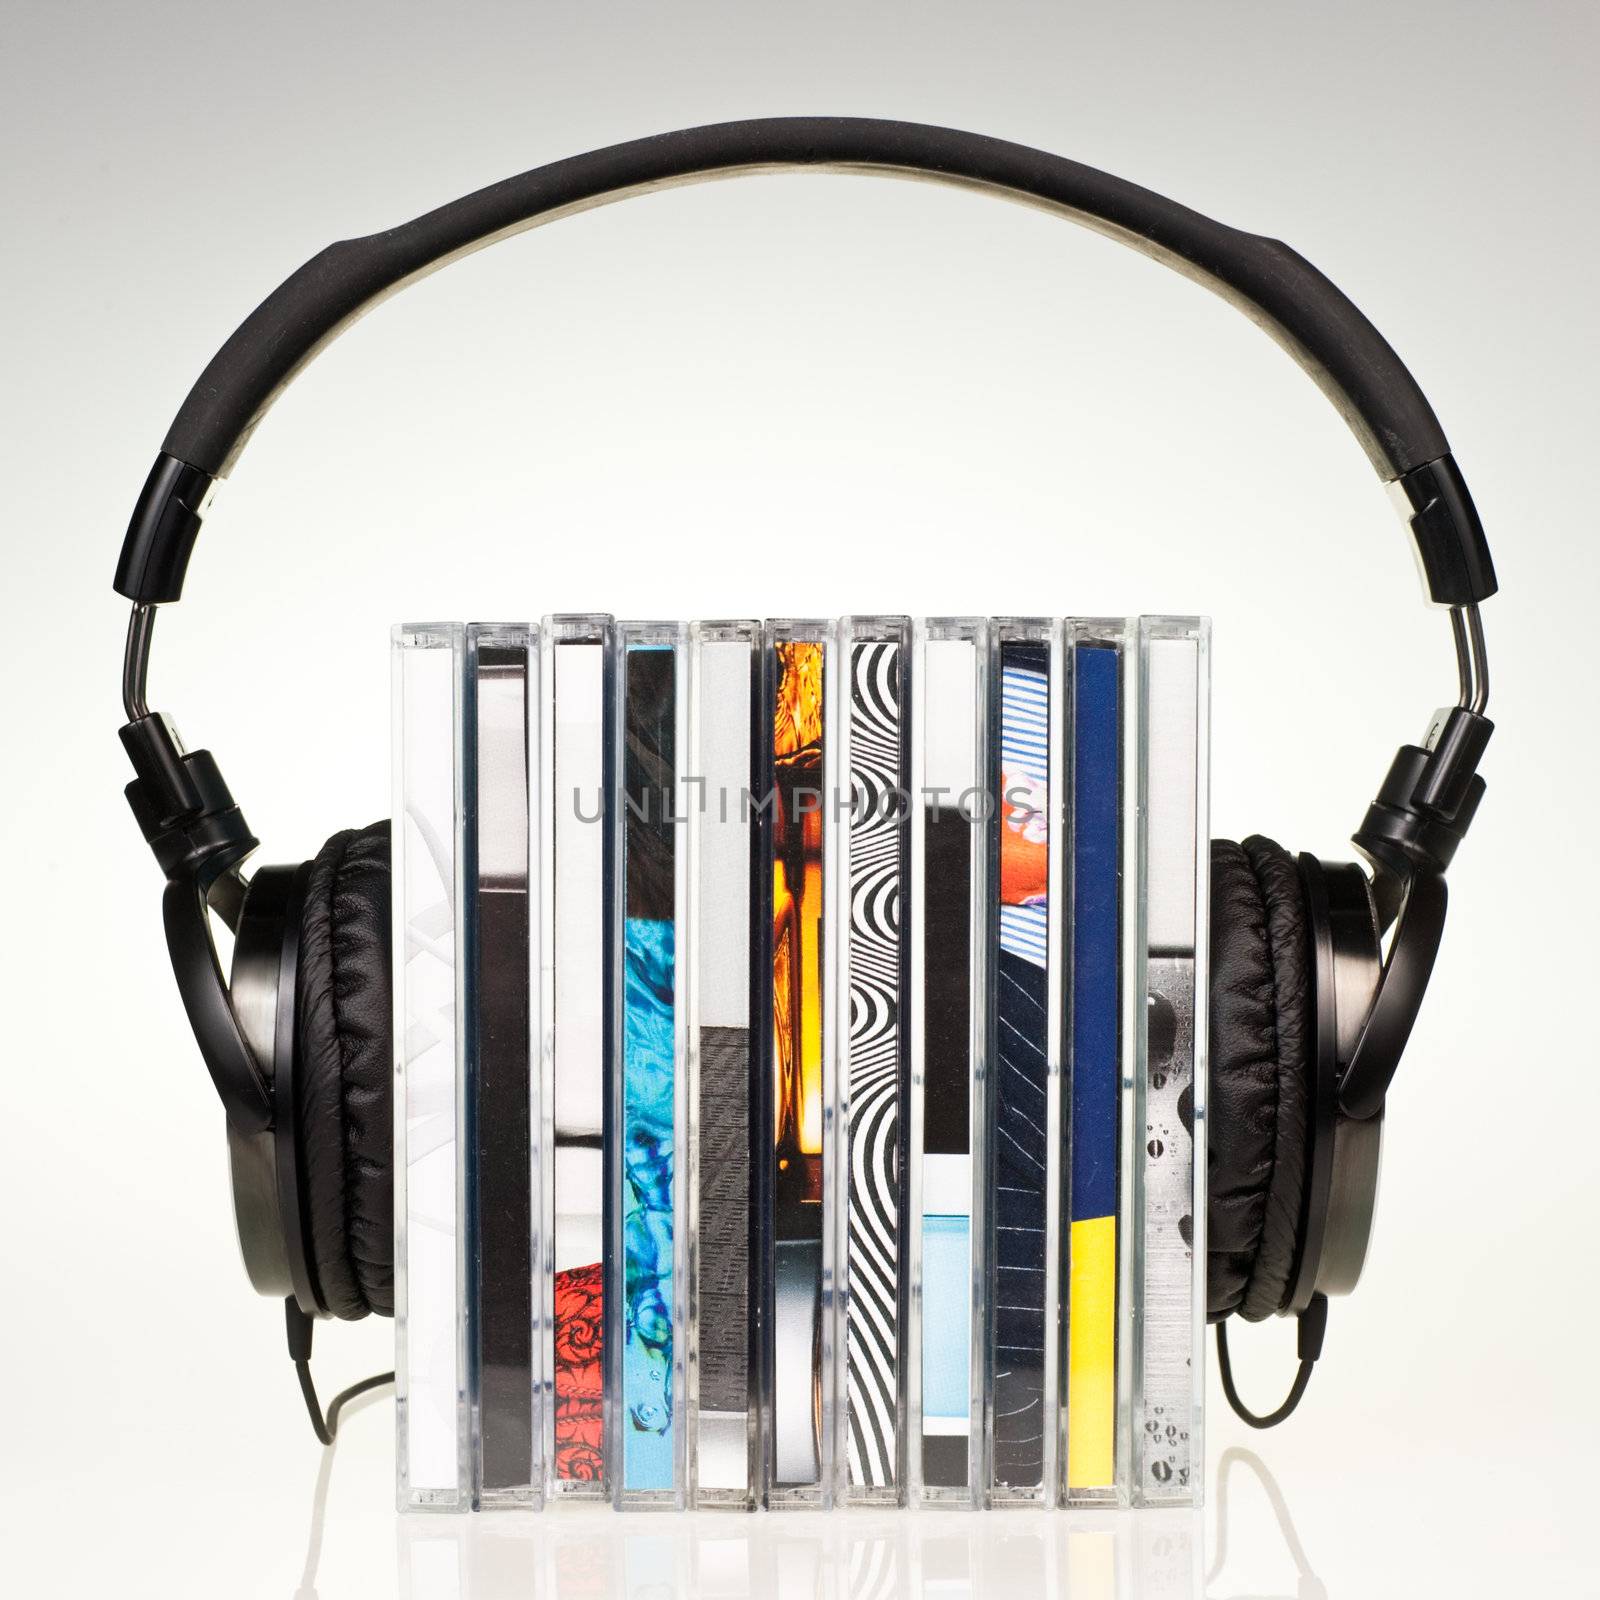 Headphones on stack of CDs by naumoid